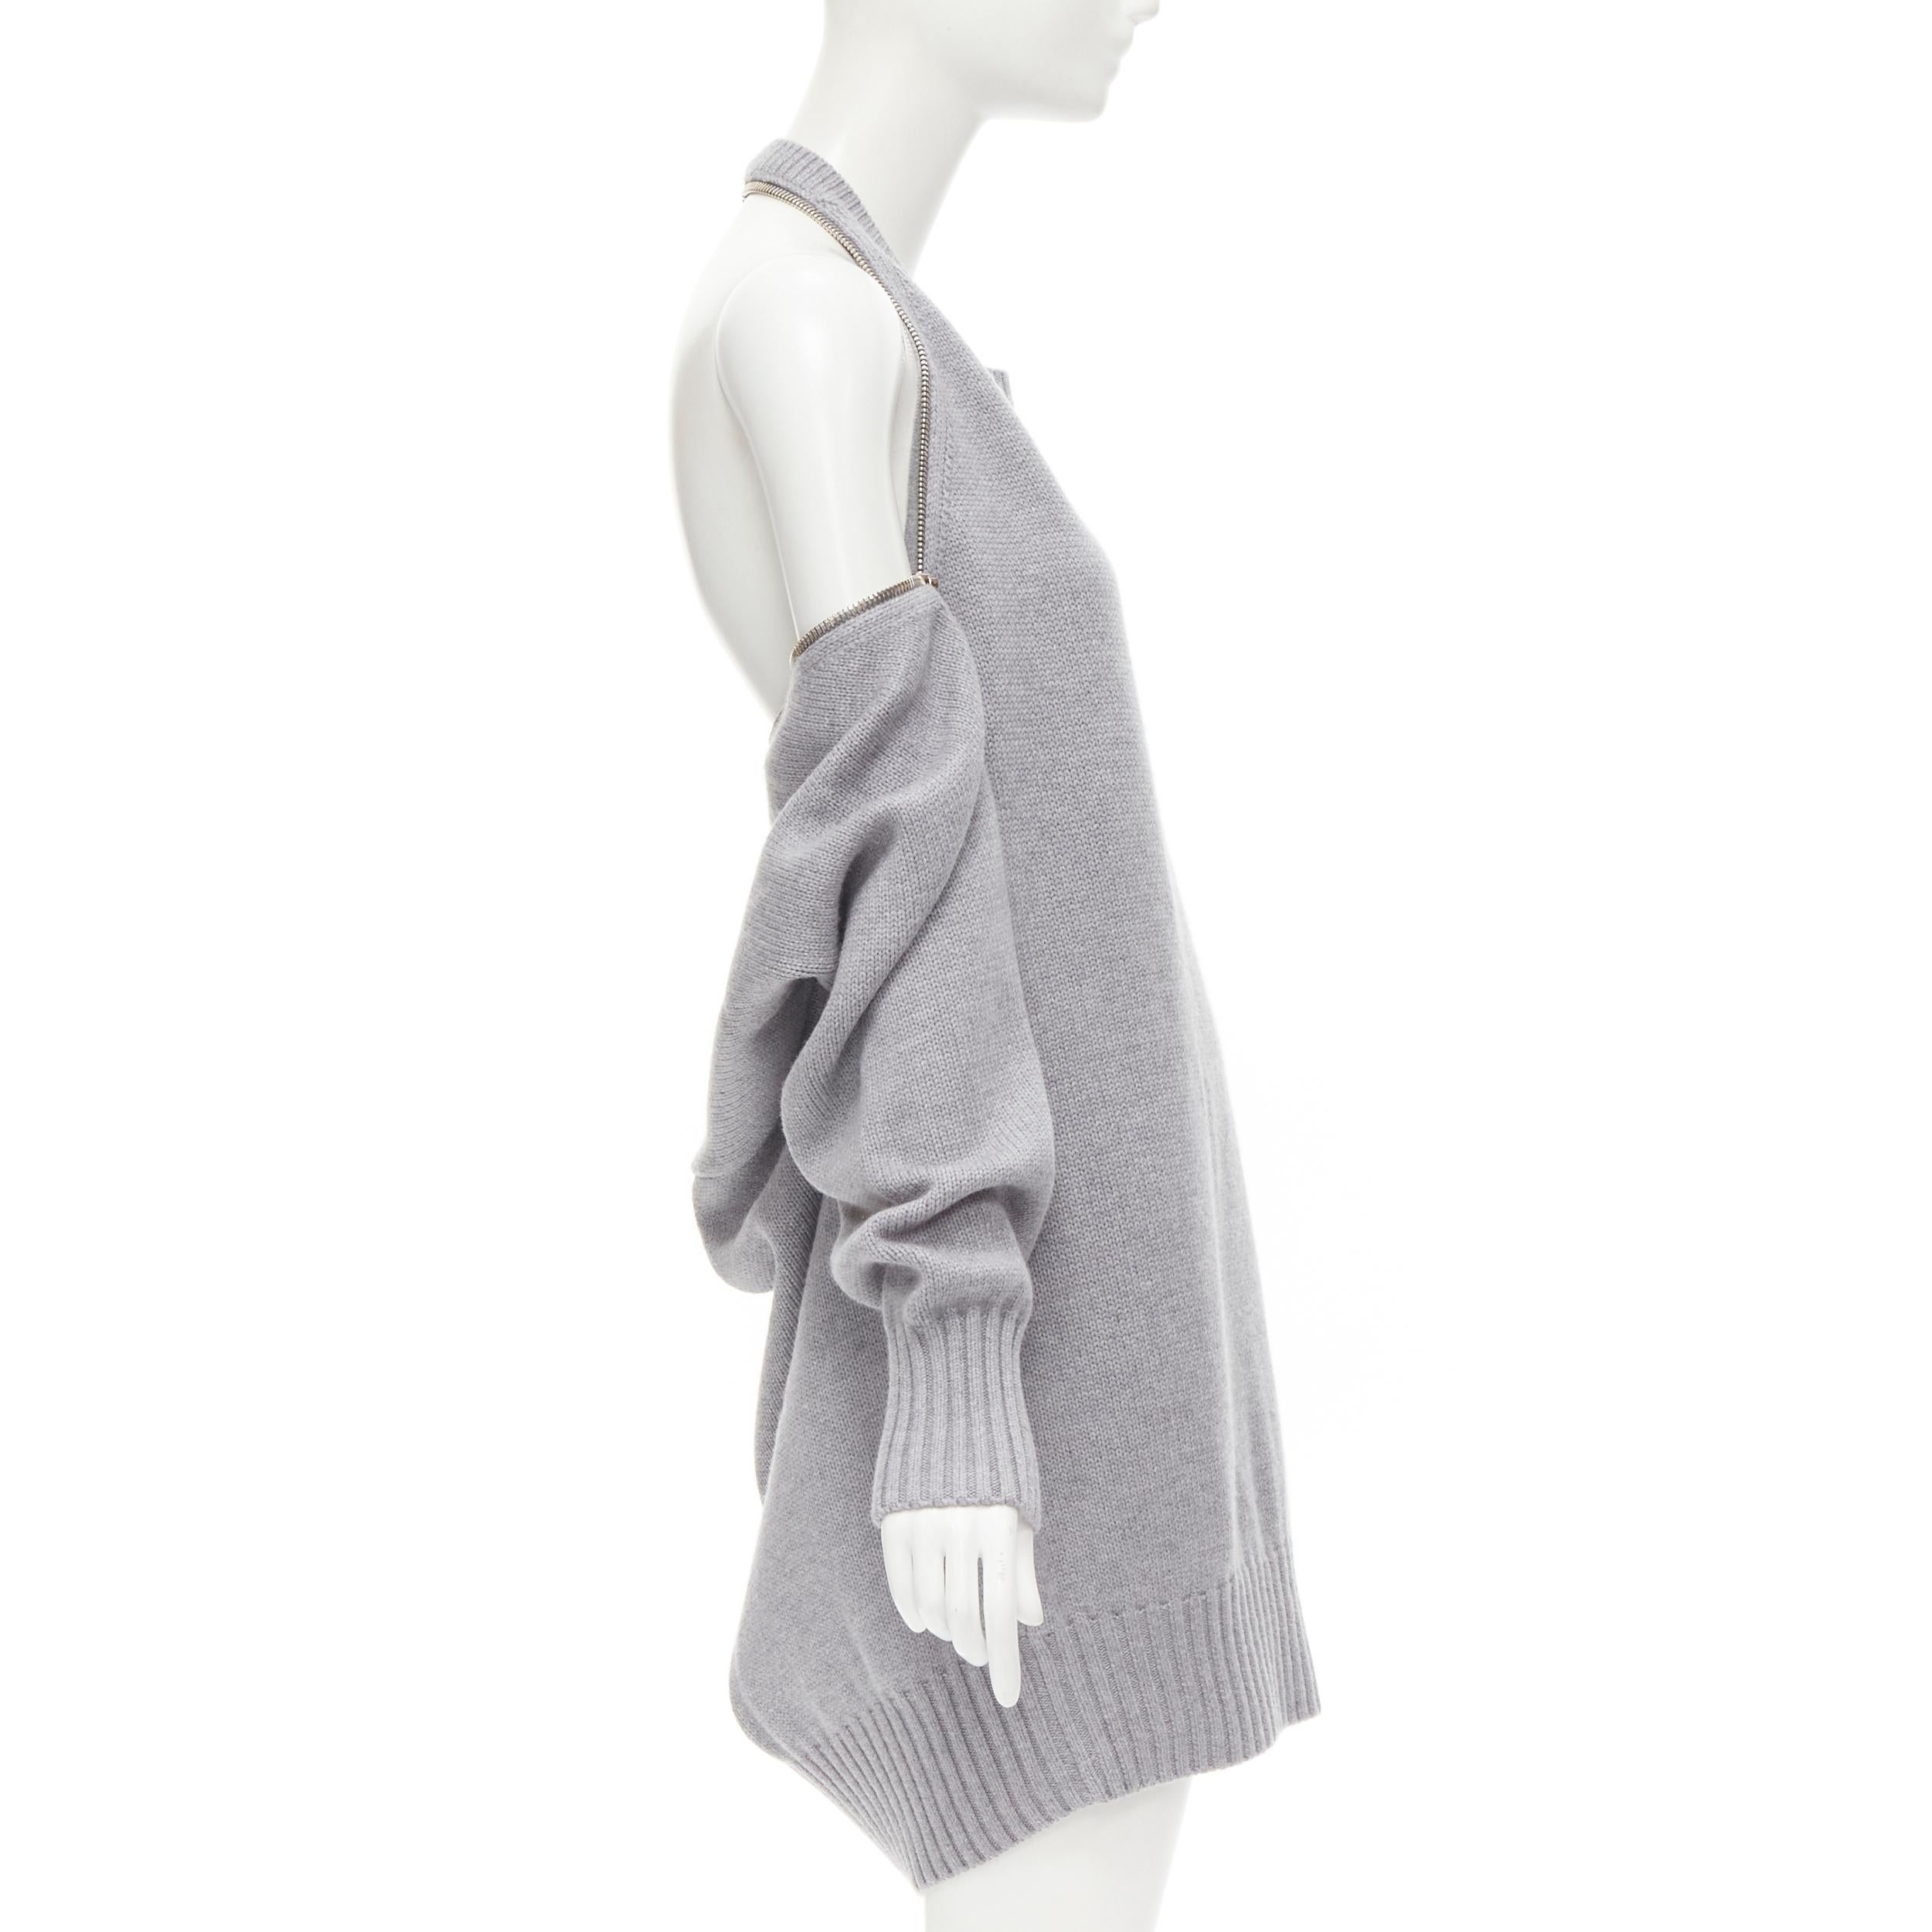 ALEXANDER WANG grey merino wool chunky knit zip trim sweater dress M 1